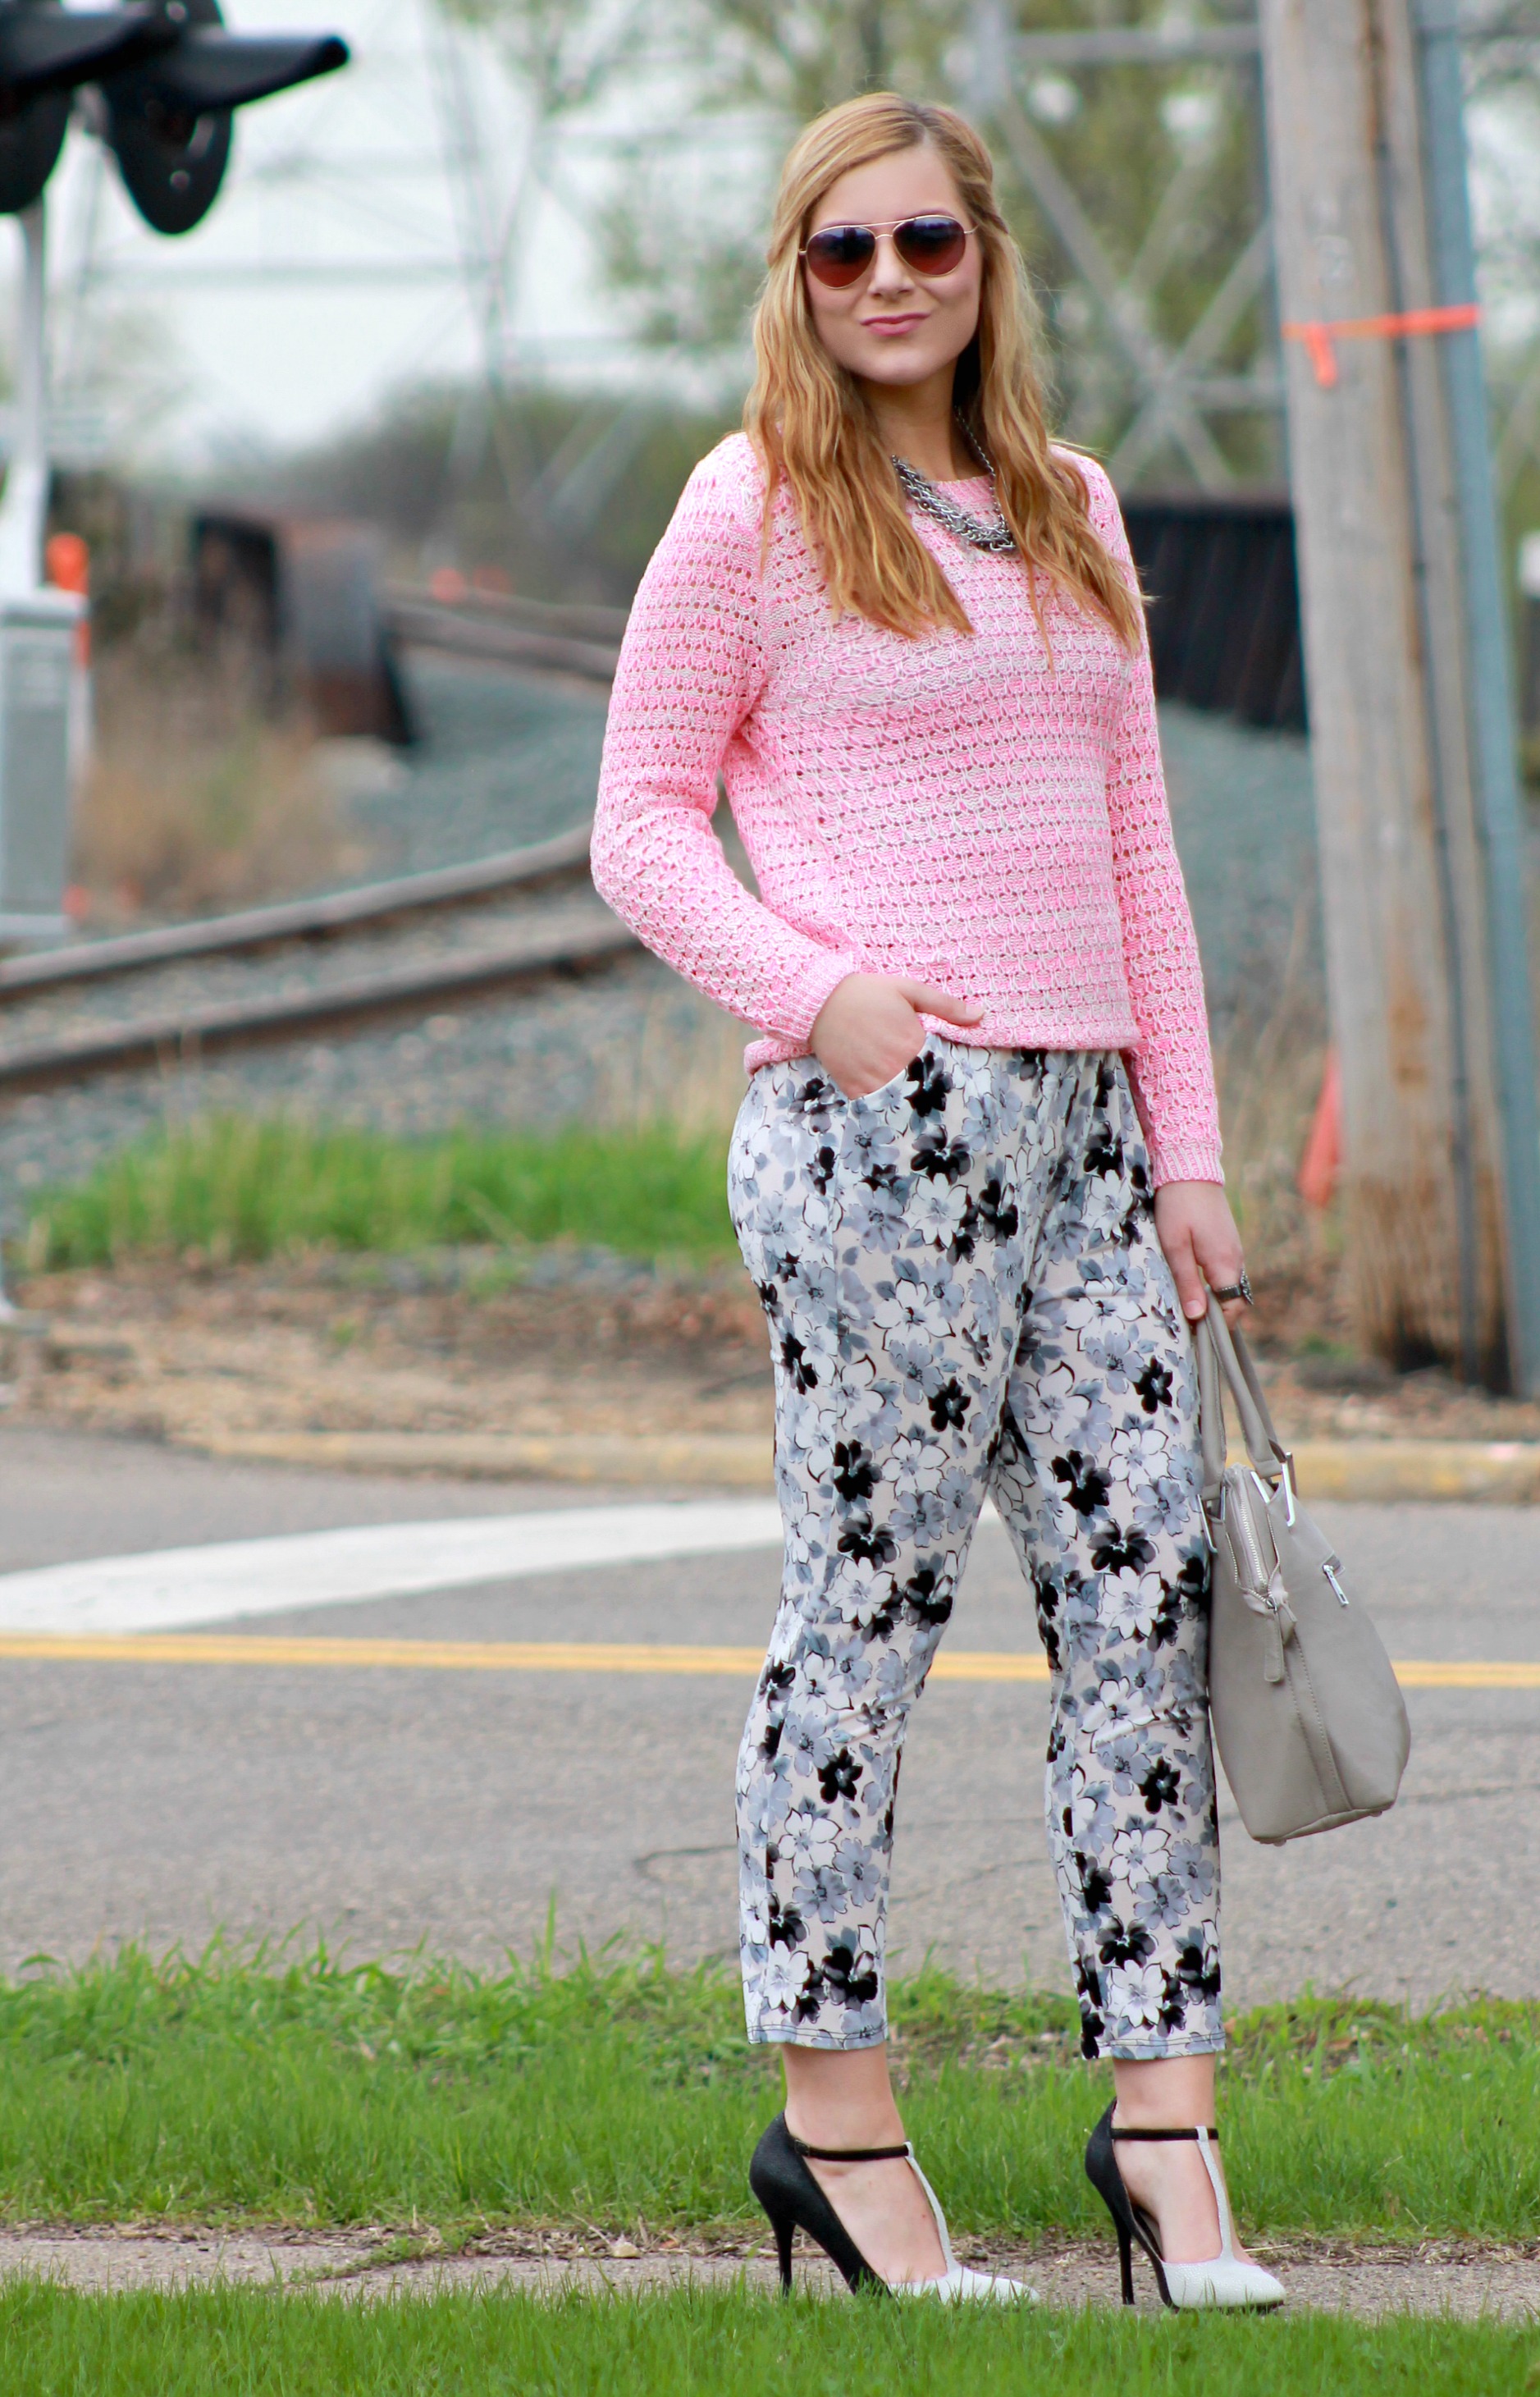 Pink Neon Sweater + T-Strap Heels